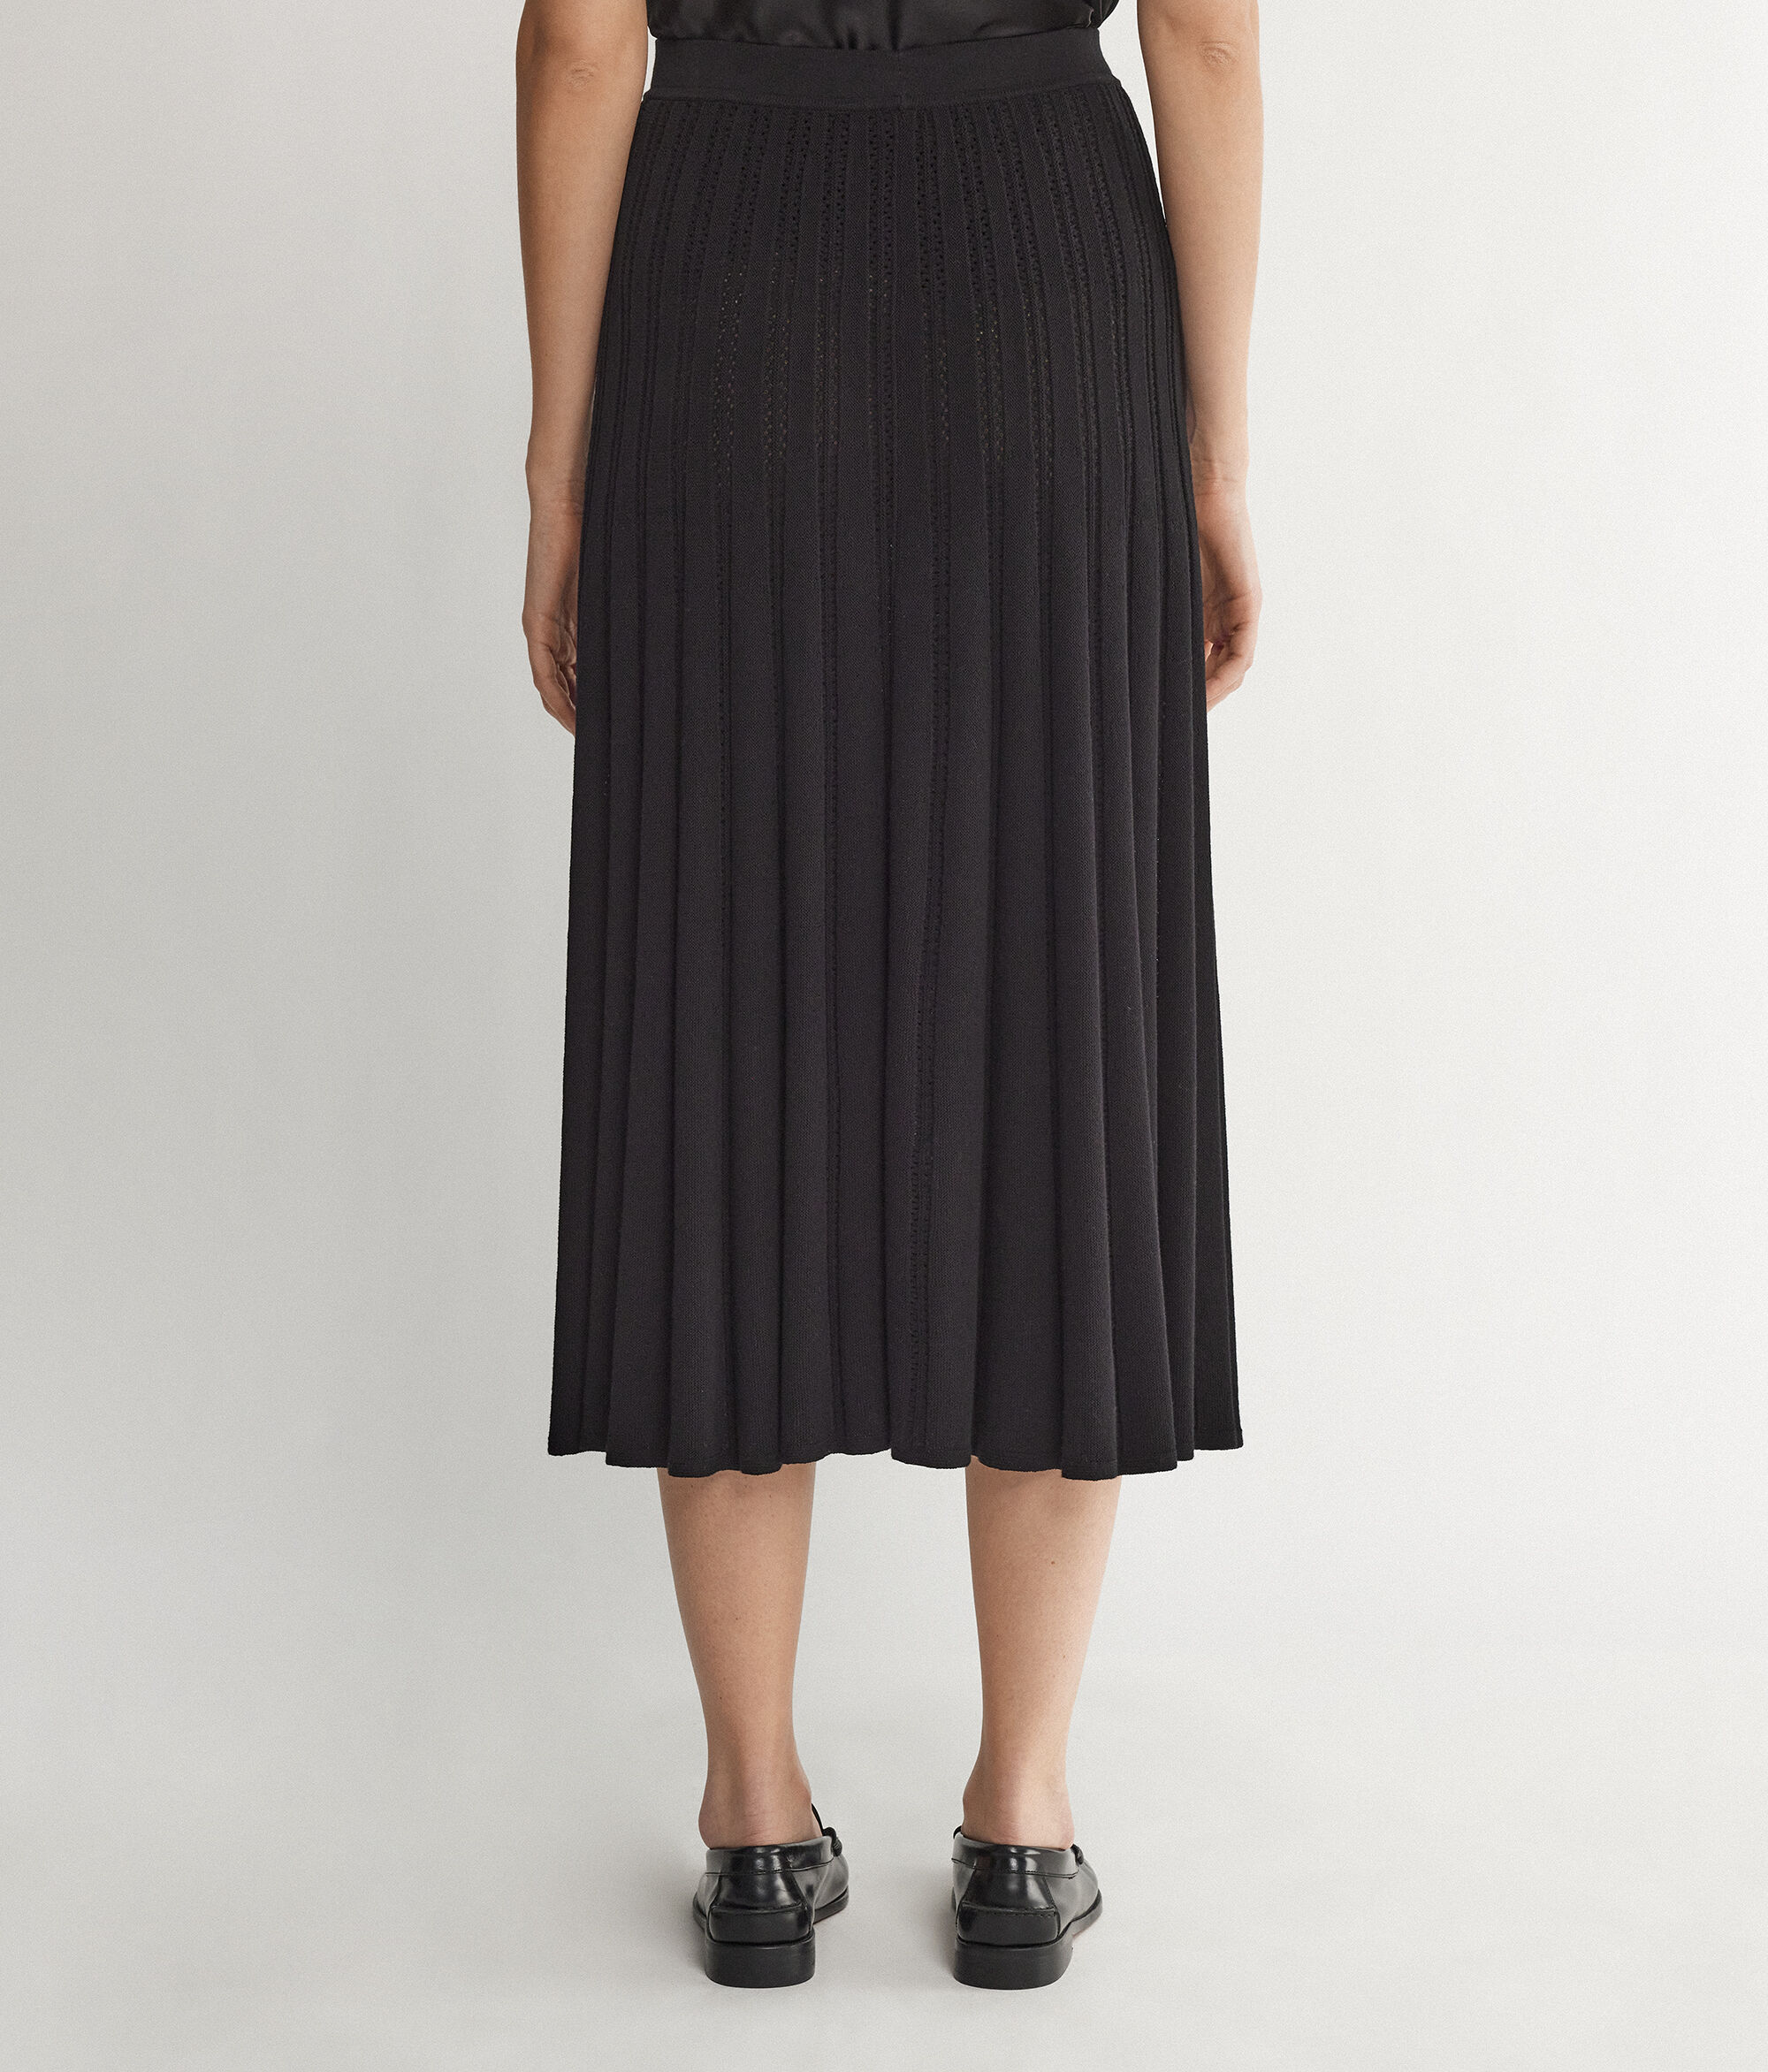 Skirt with Mesh-knit Stitching